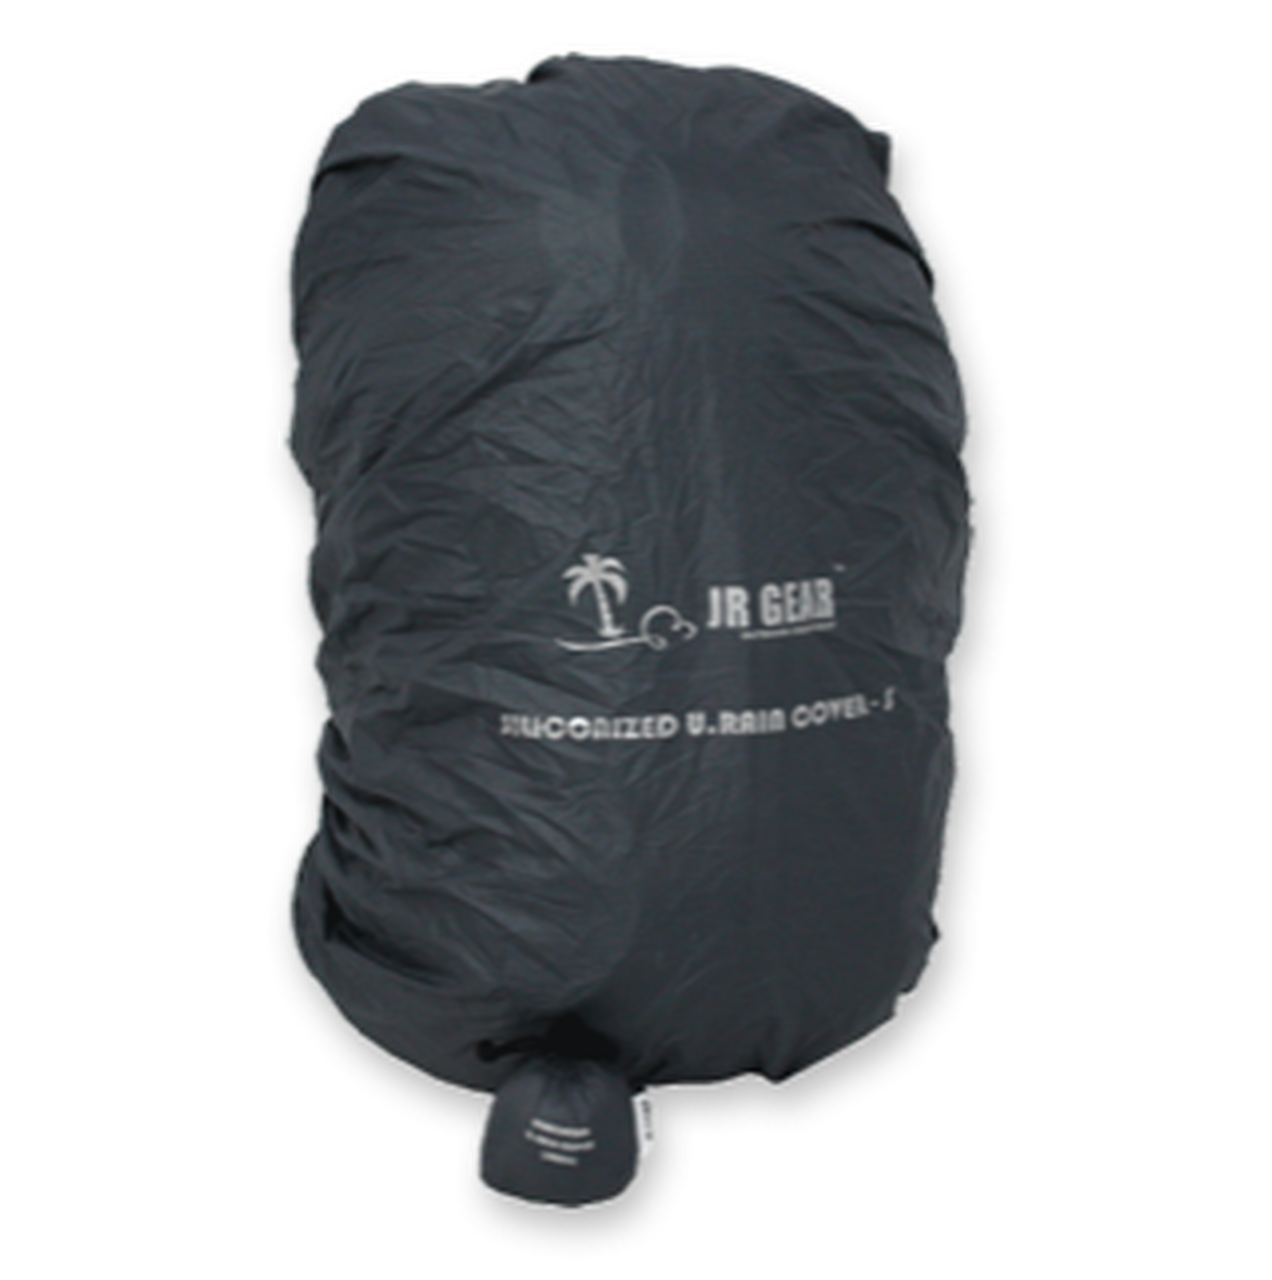 JR Gear Siliconized U Shape Rain Covers for Backpacks